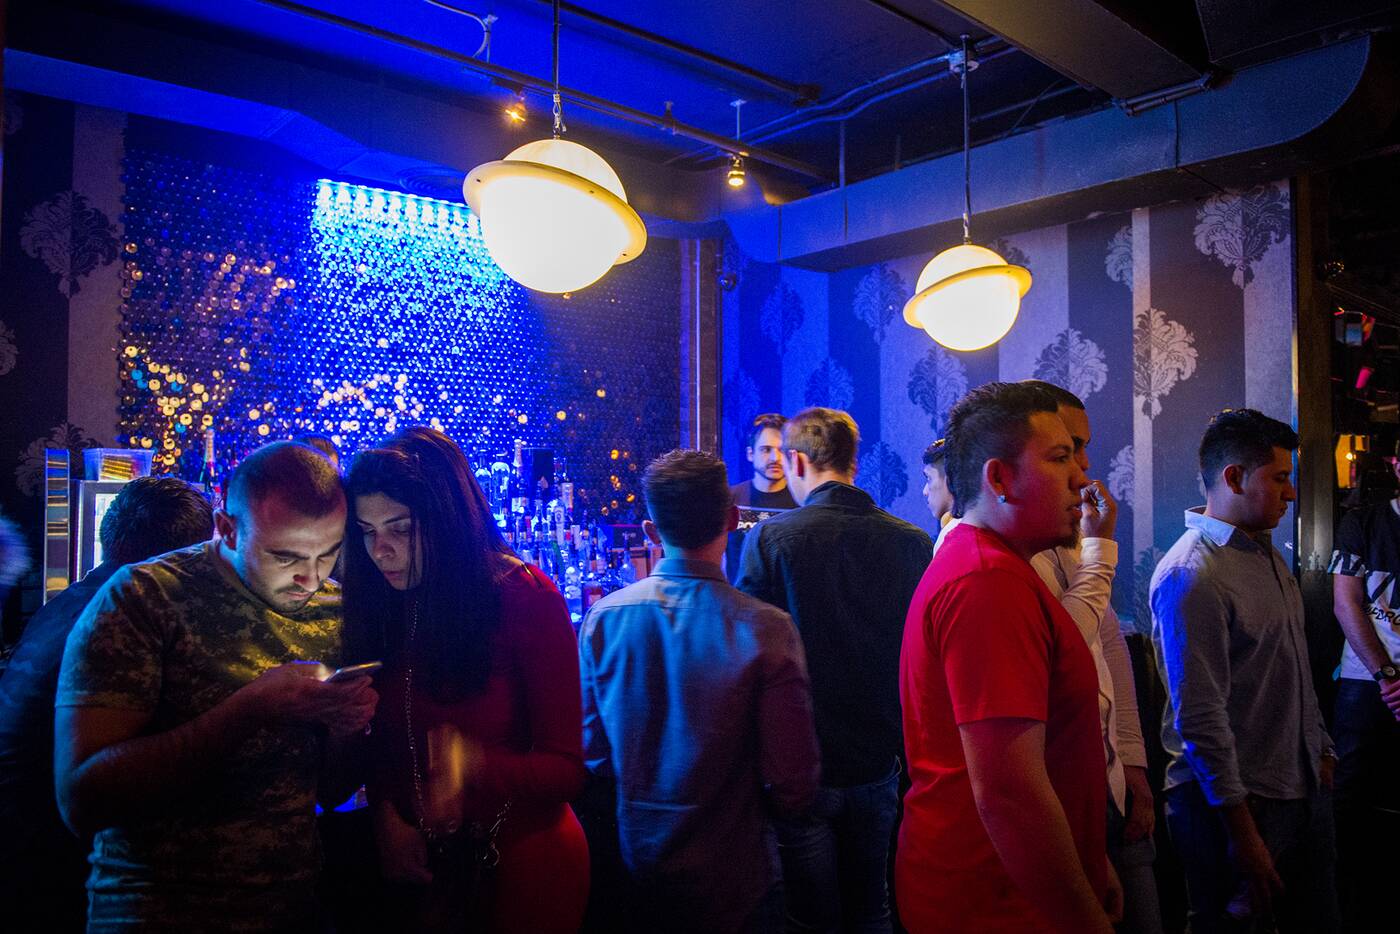 Latin nightclub brings the party Wednesday nights in Toronto